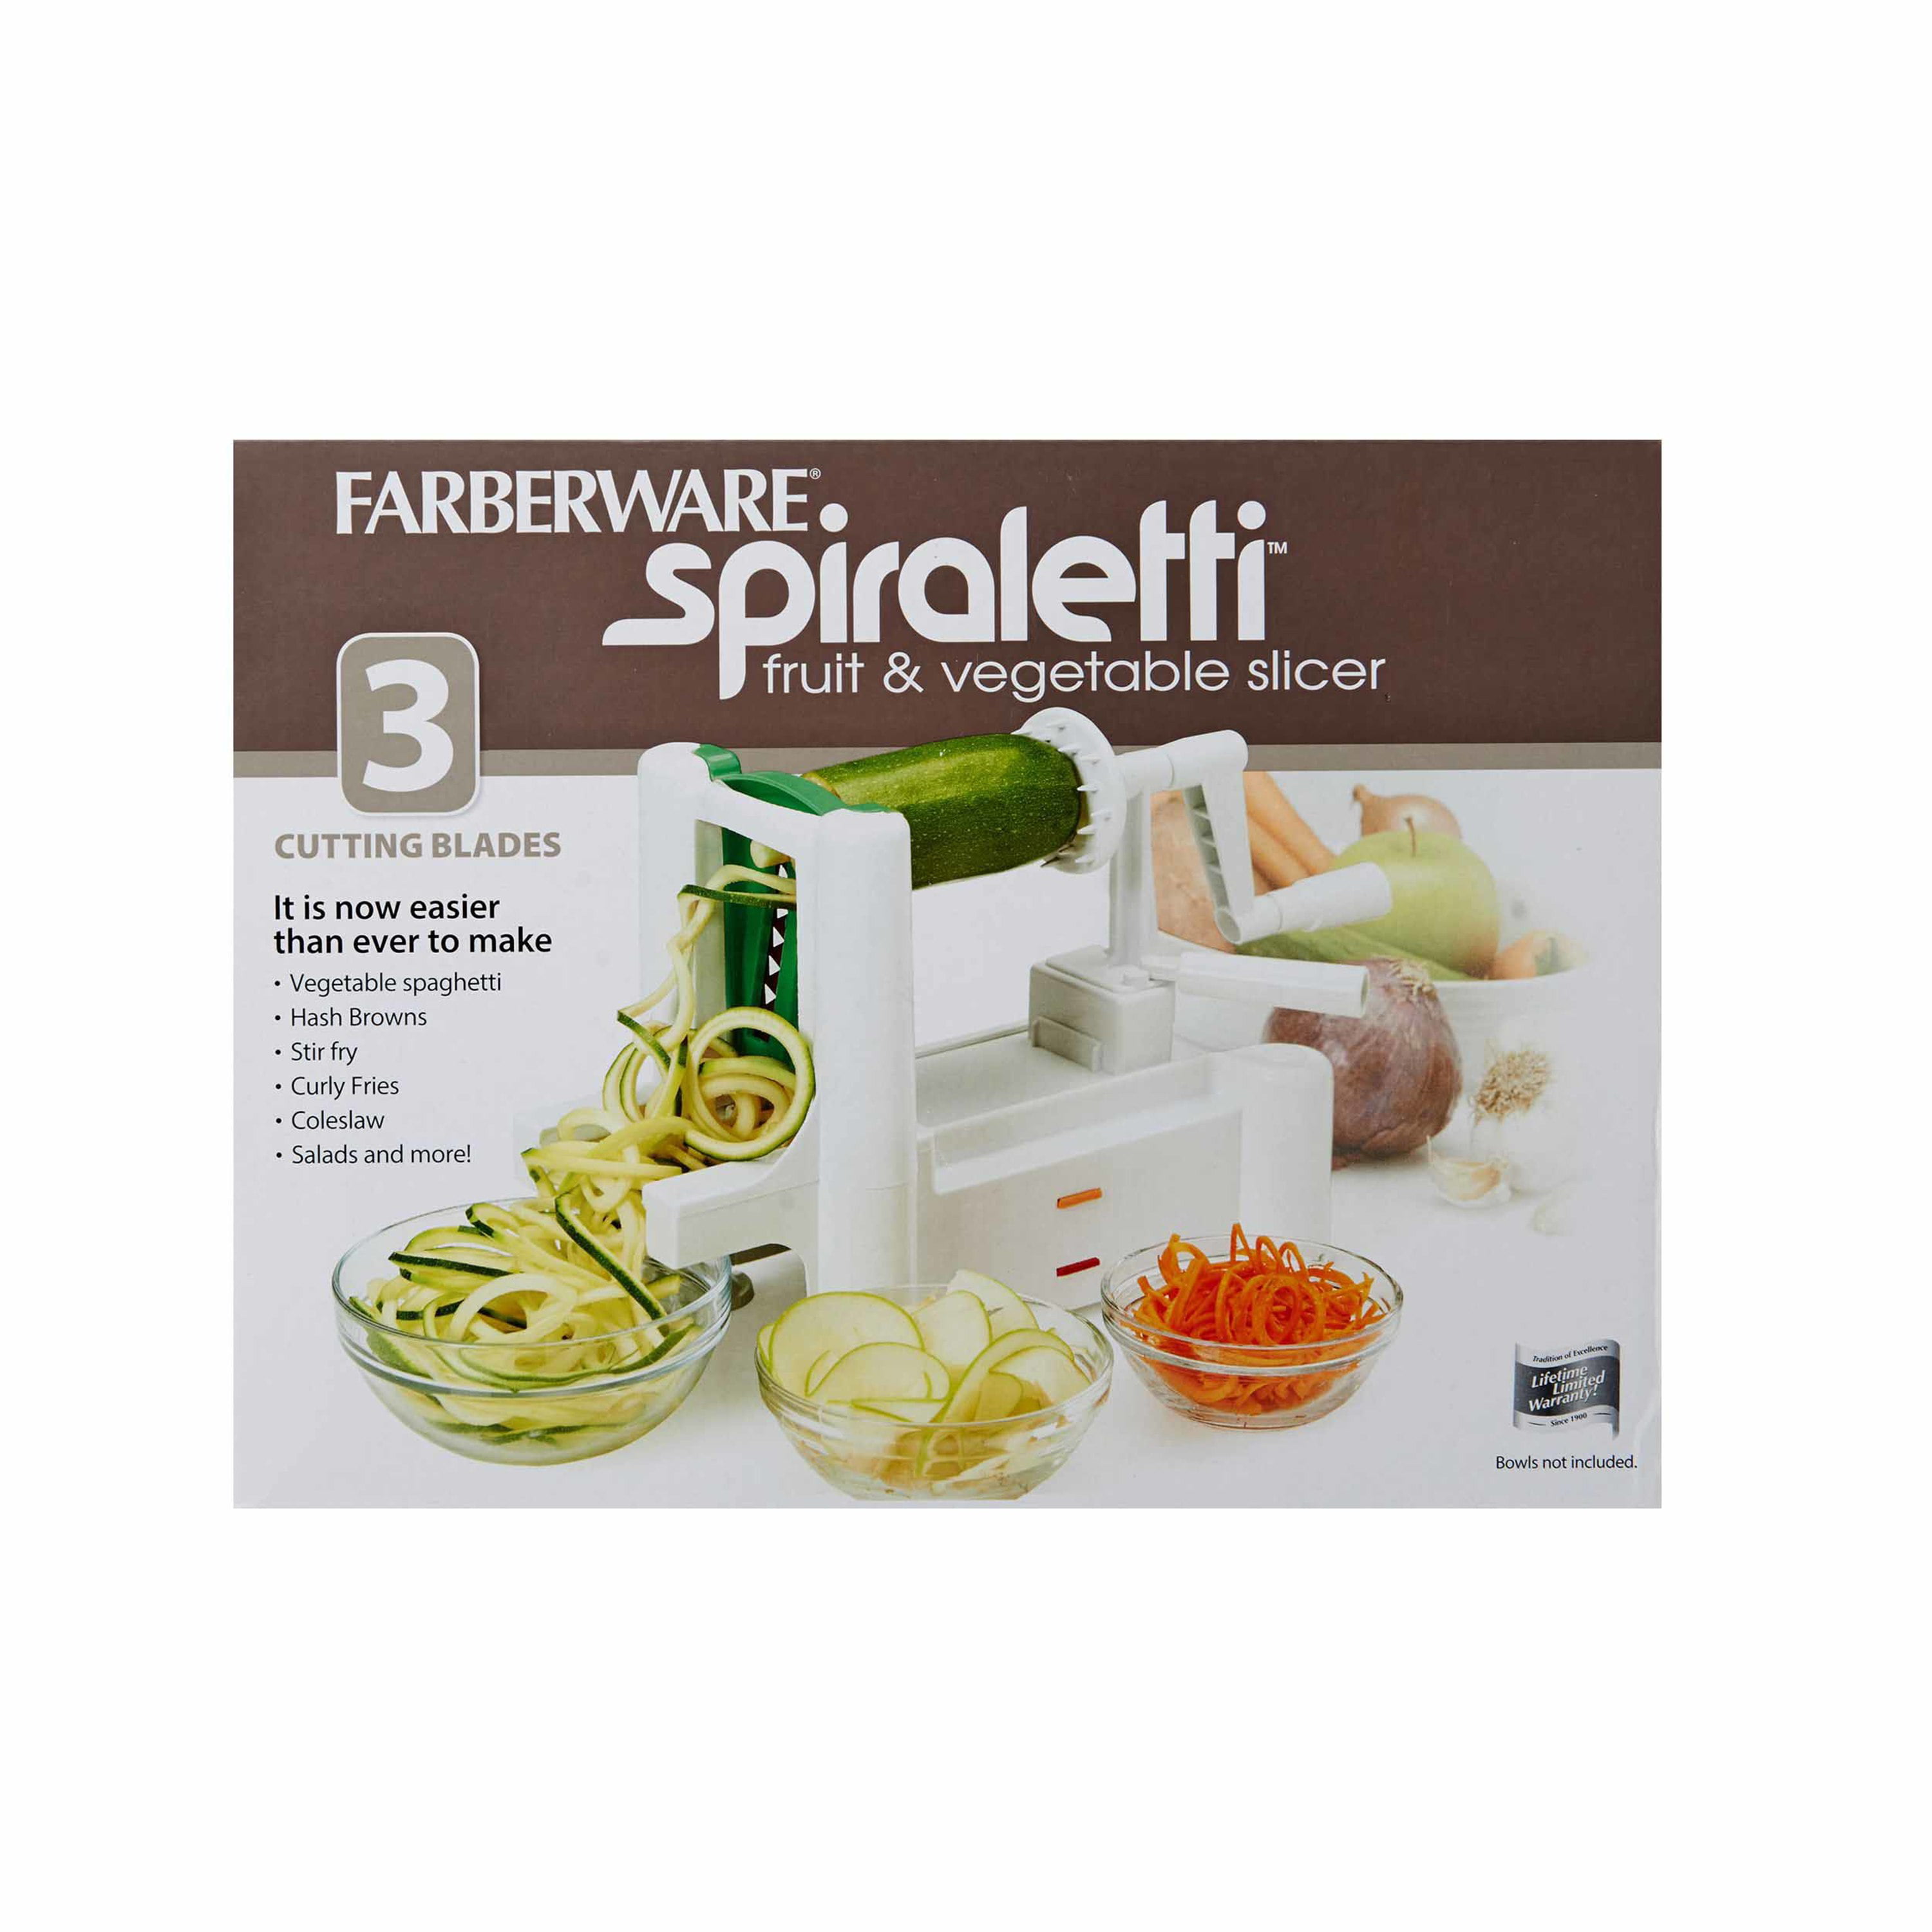 Farberware Spiraletti Fruit and Vegetable Slicer 3 cutting Blades